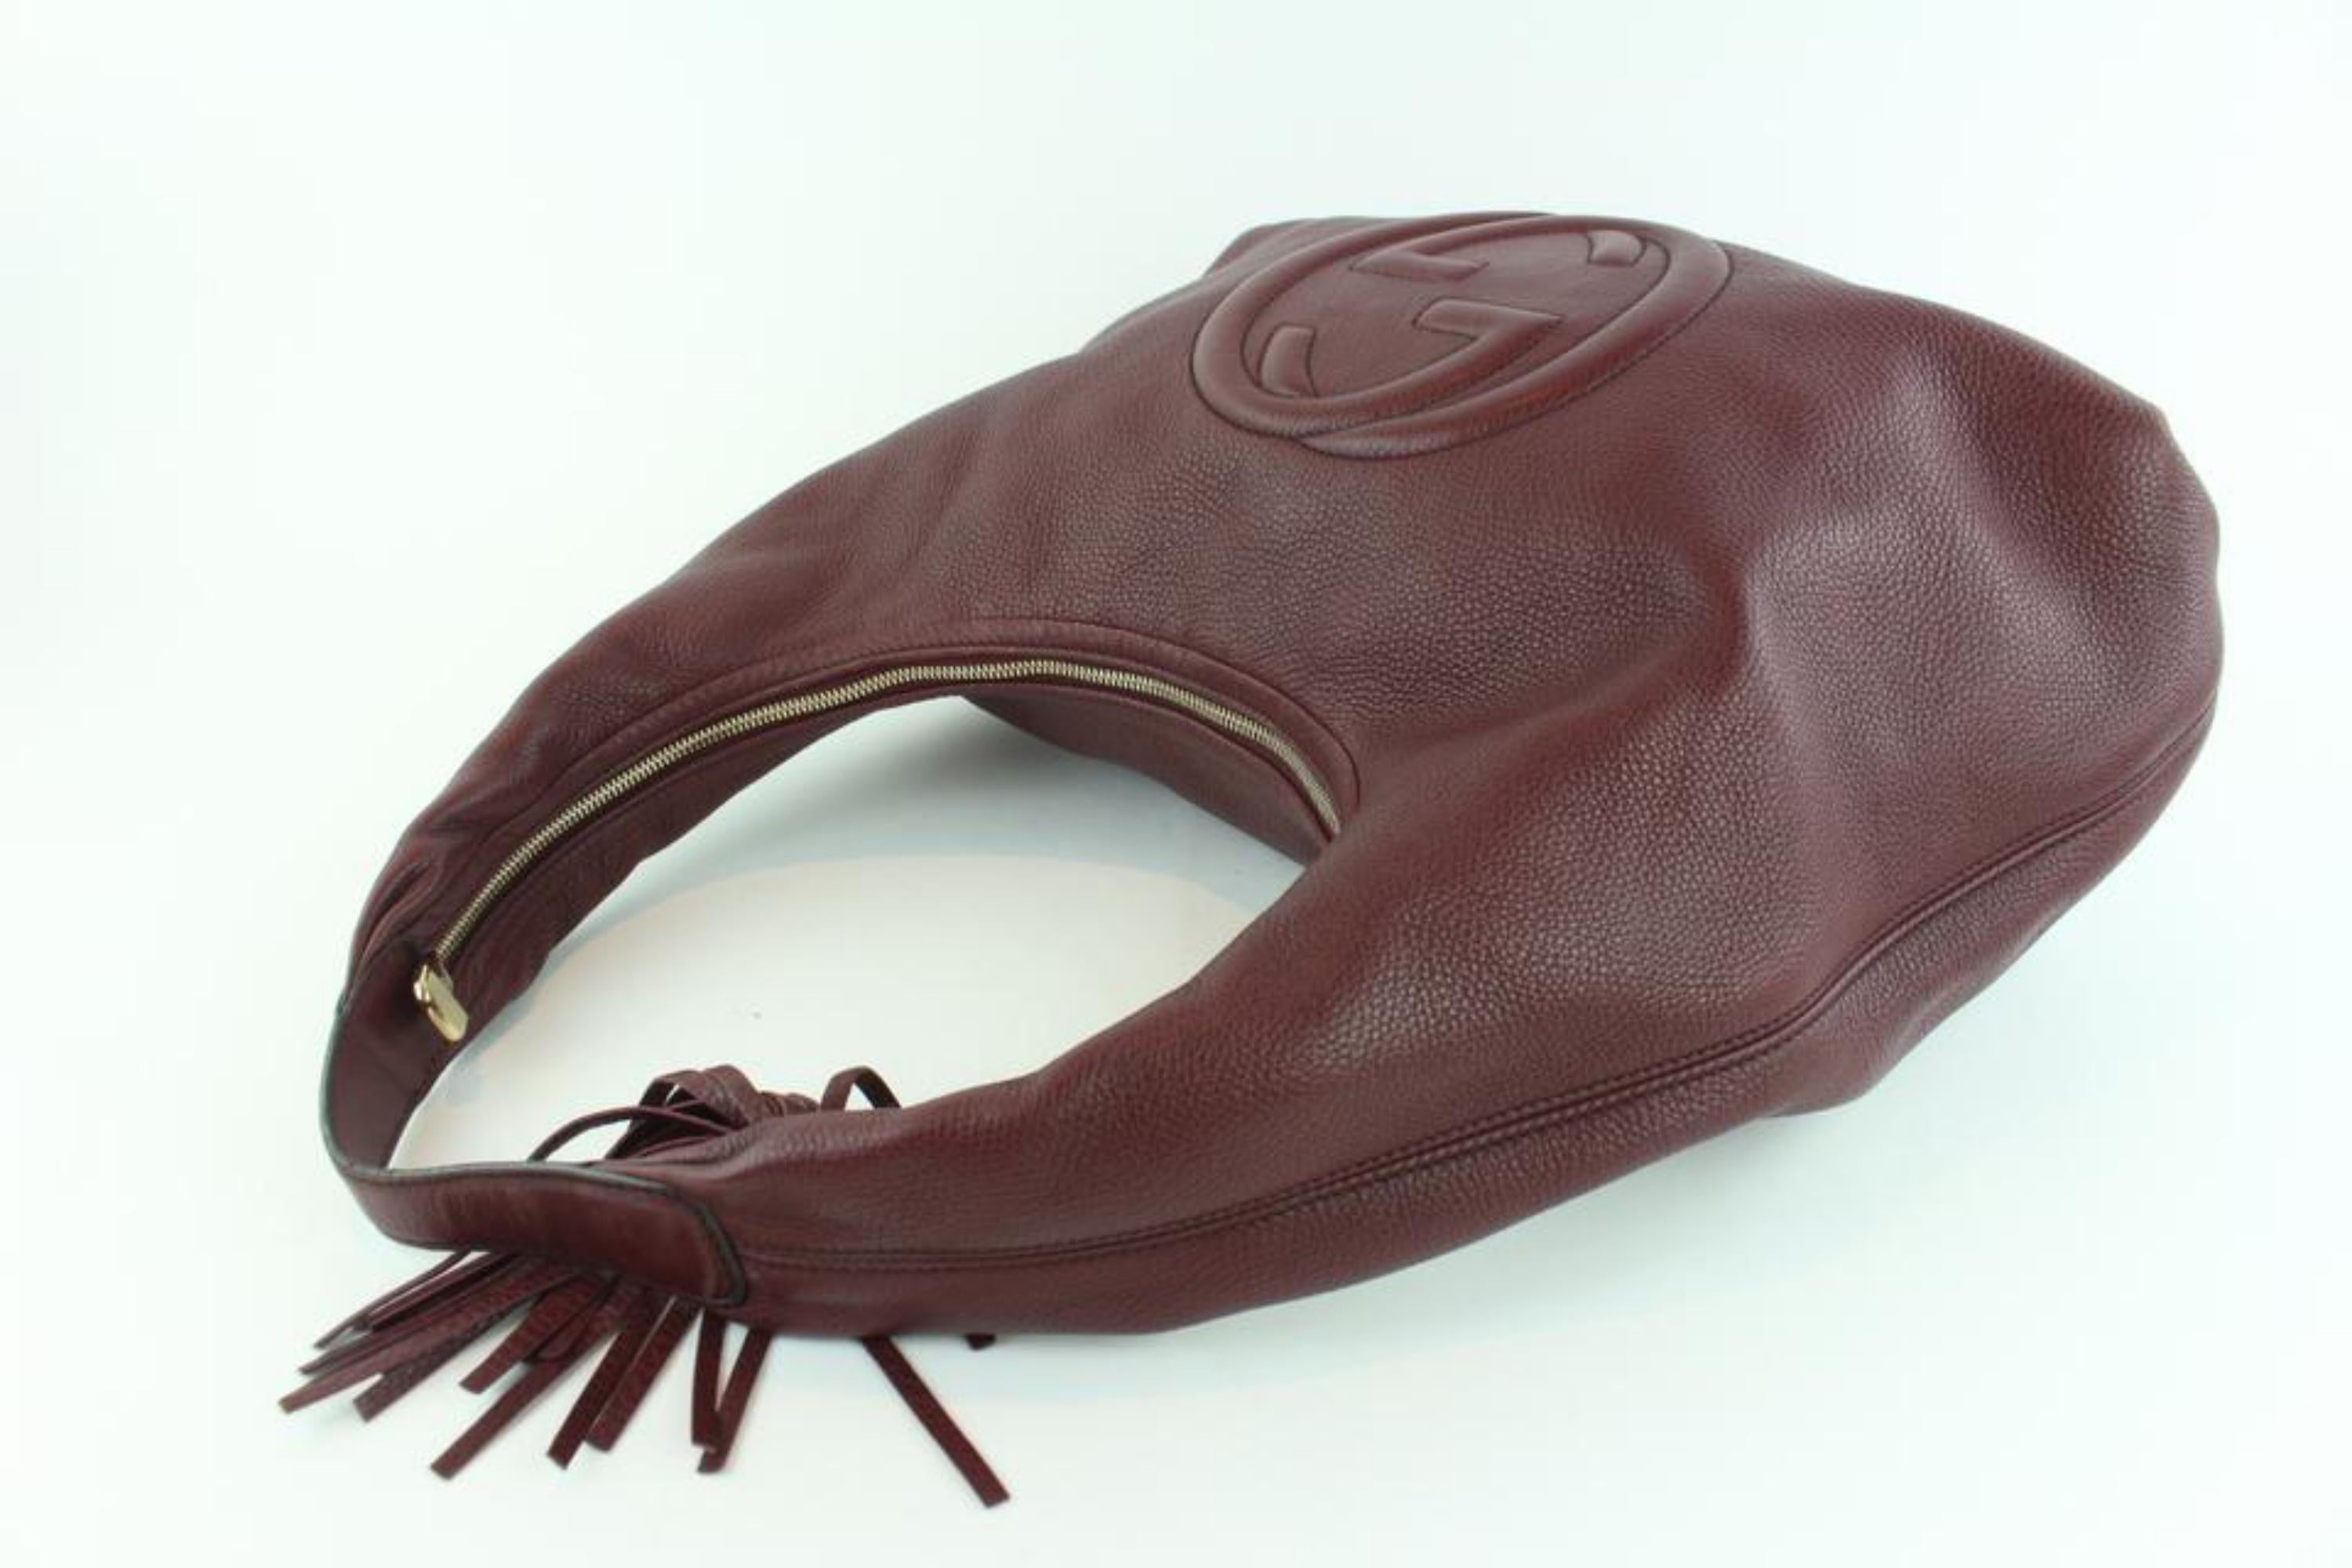 Gucci Soho Large Pebbled Calfskin 17gz1102 Burgundy Leather Hobo Bag For Sale 1